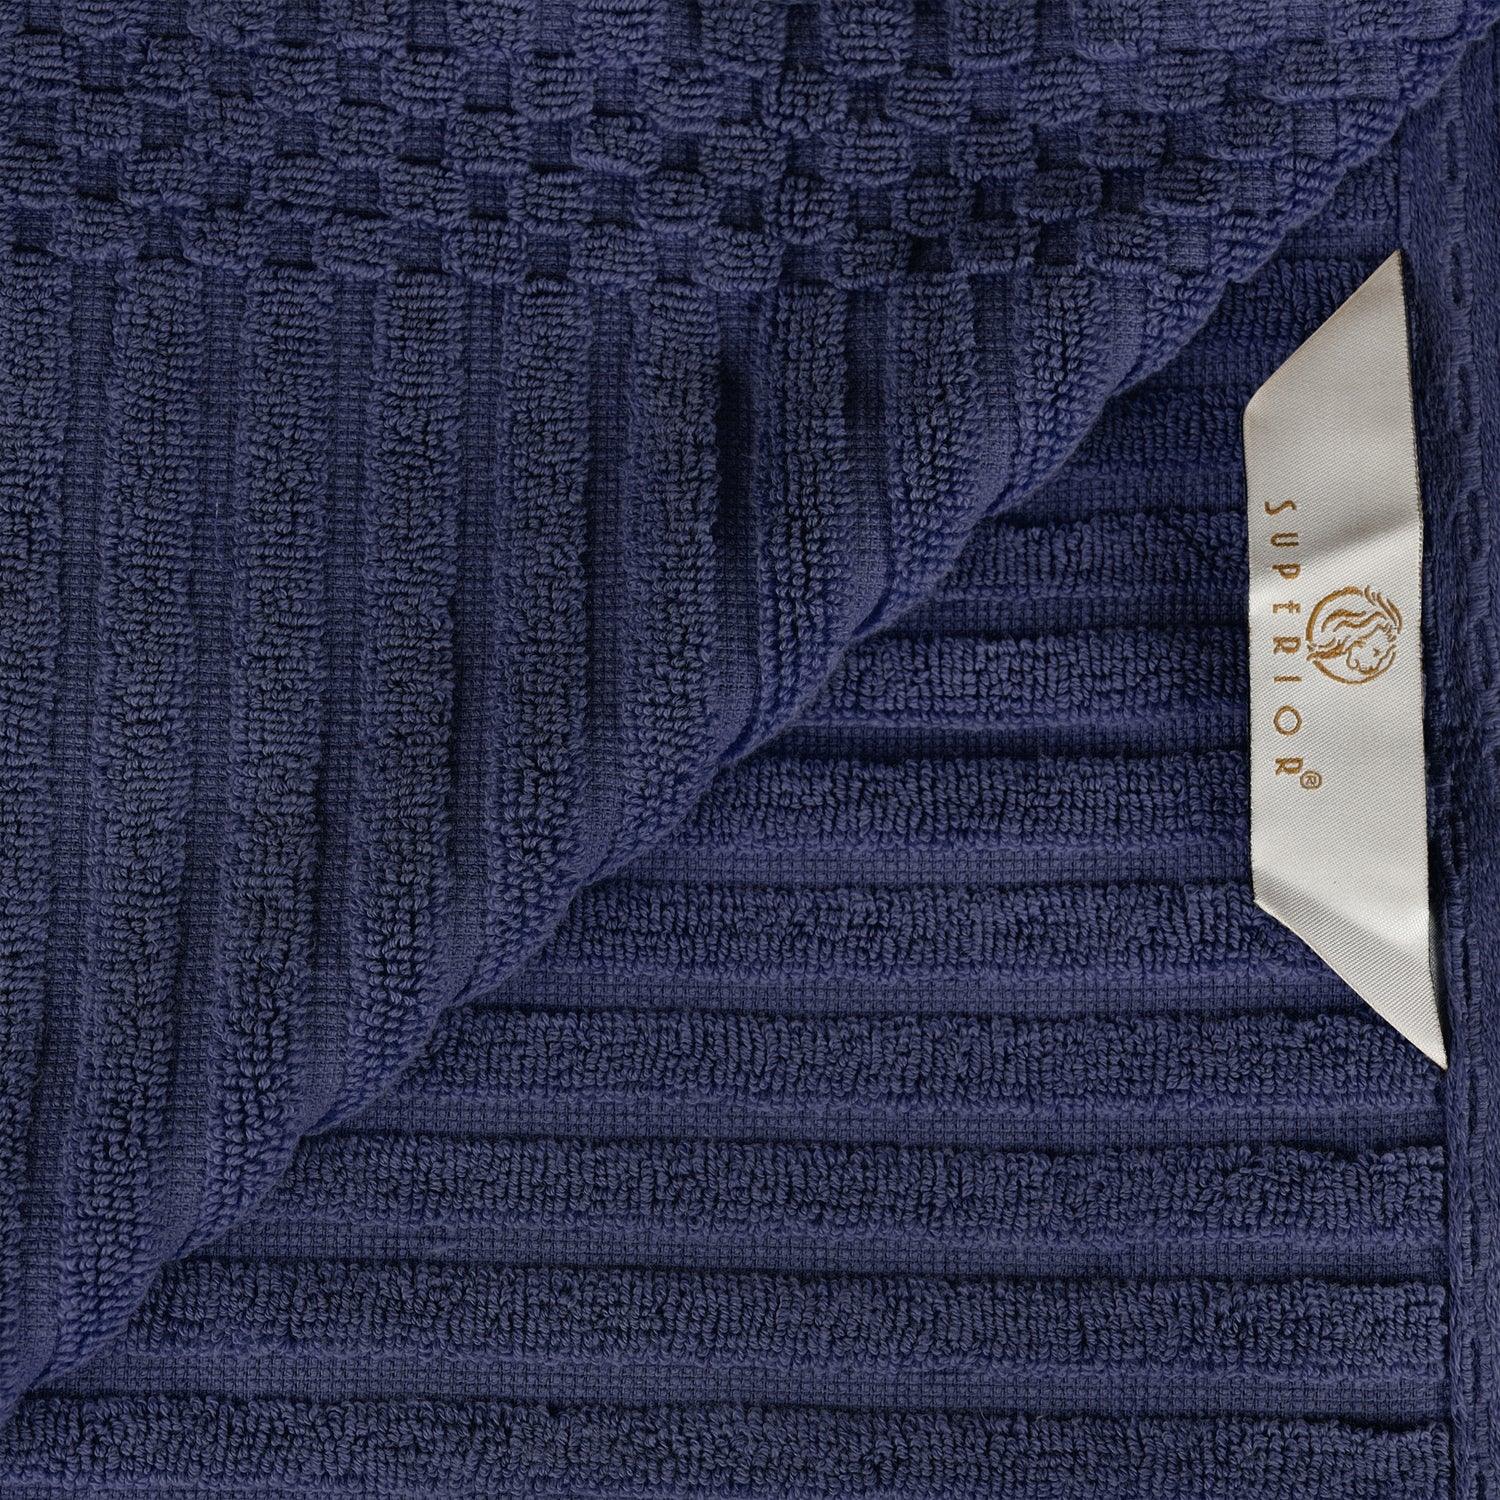  Superior Soho Ribbed Textured Cotton Ultra-Absorbent Hand Towel and Bath Sheet Set - Navy Blue